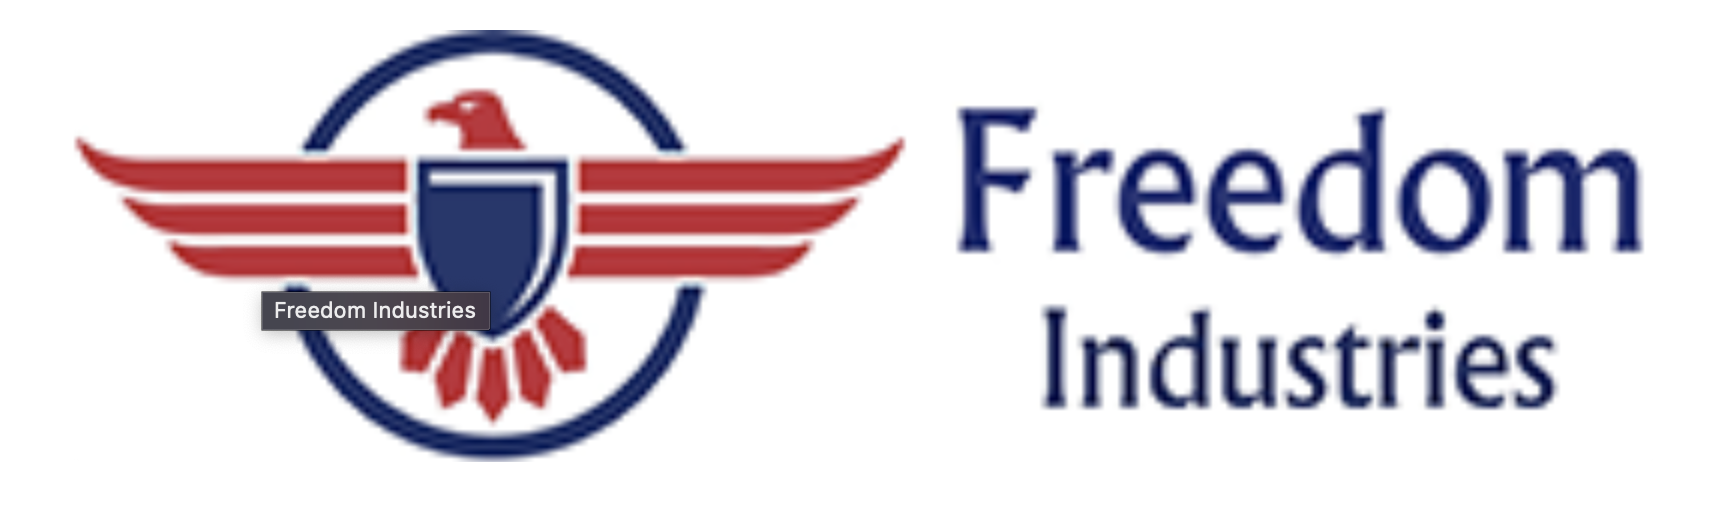 GoFormz Customer Case Study - freedom industries logo